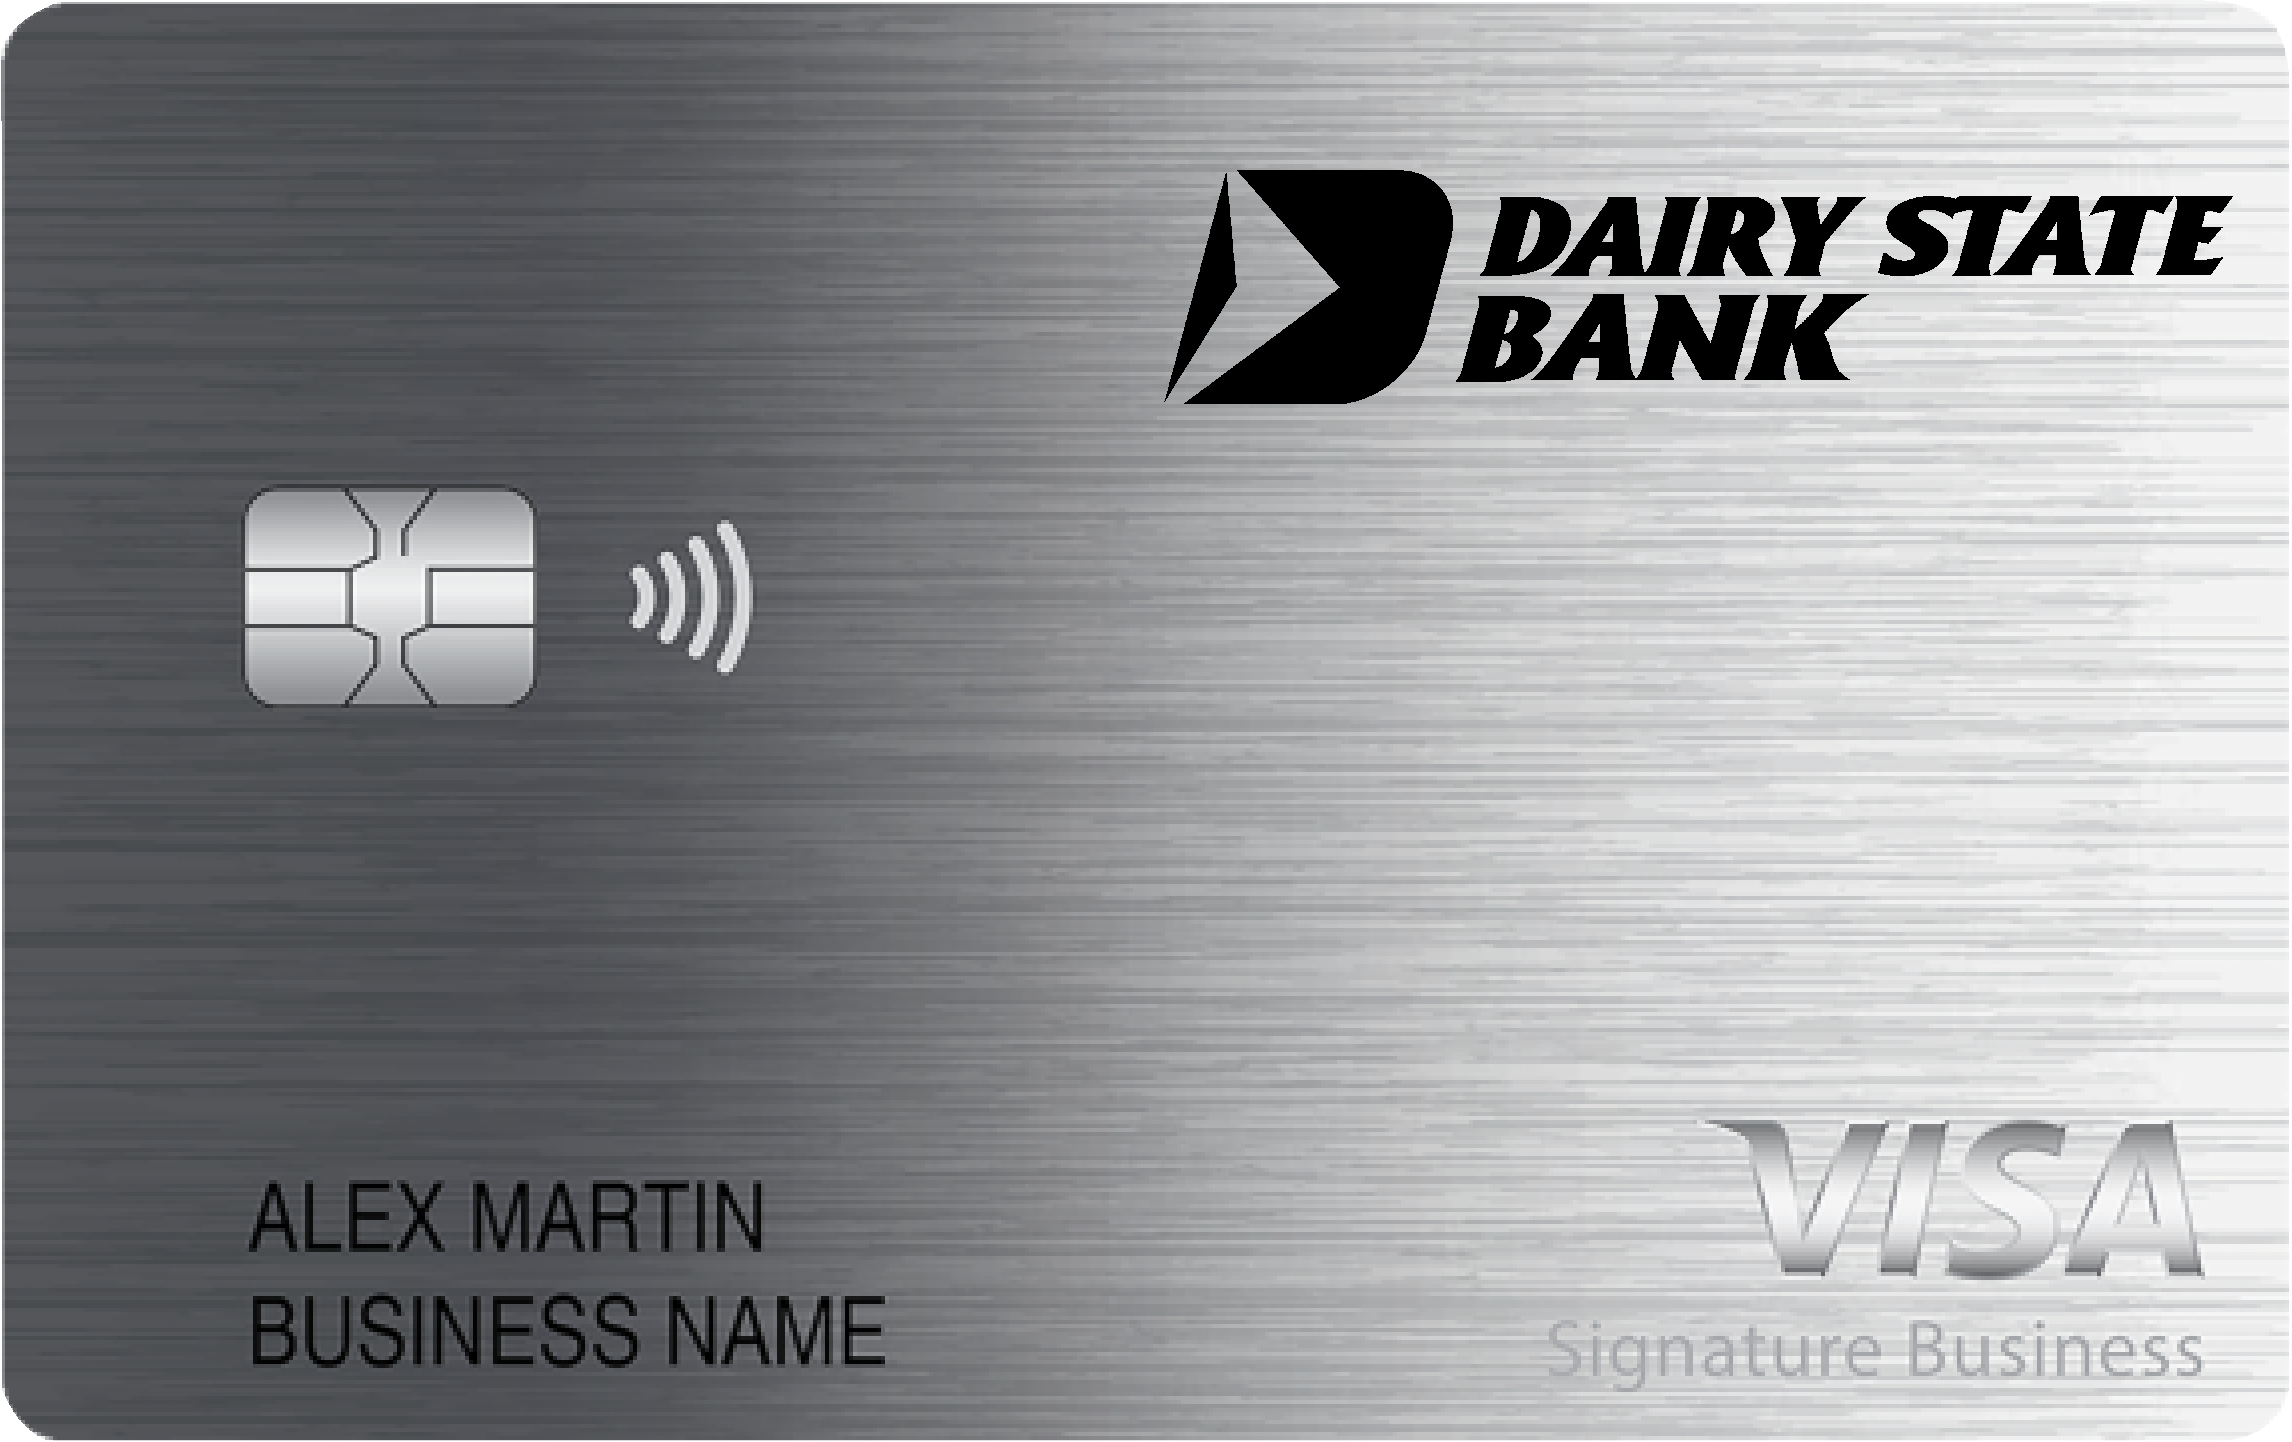 Dairy State Bank Smart Business Rewards Card